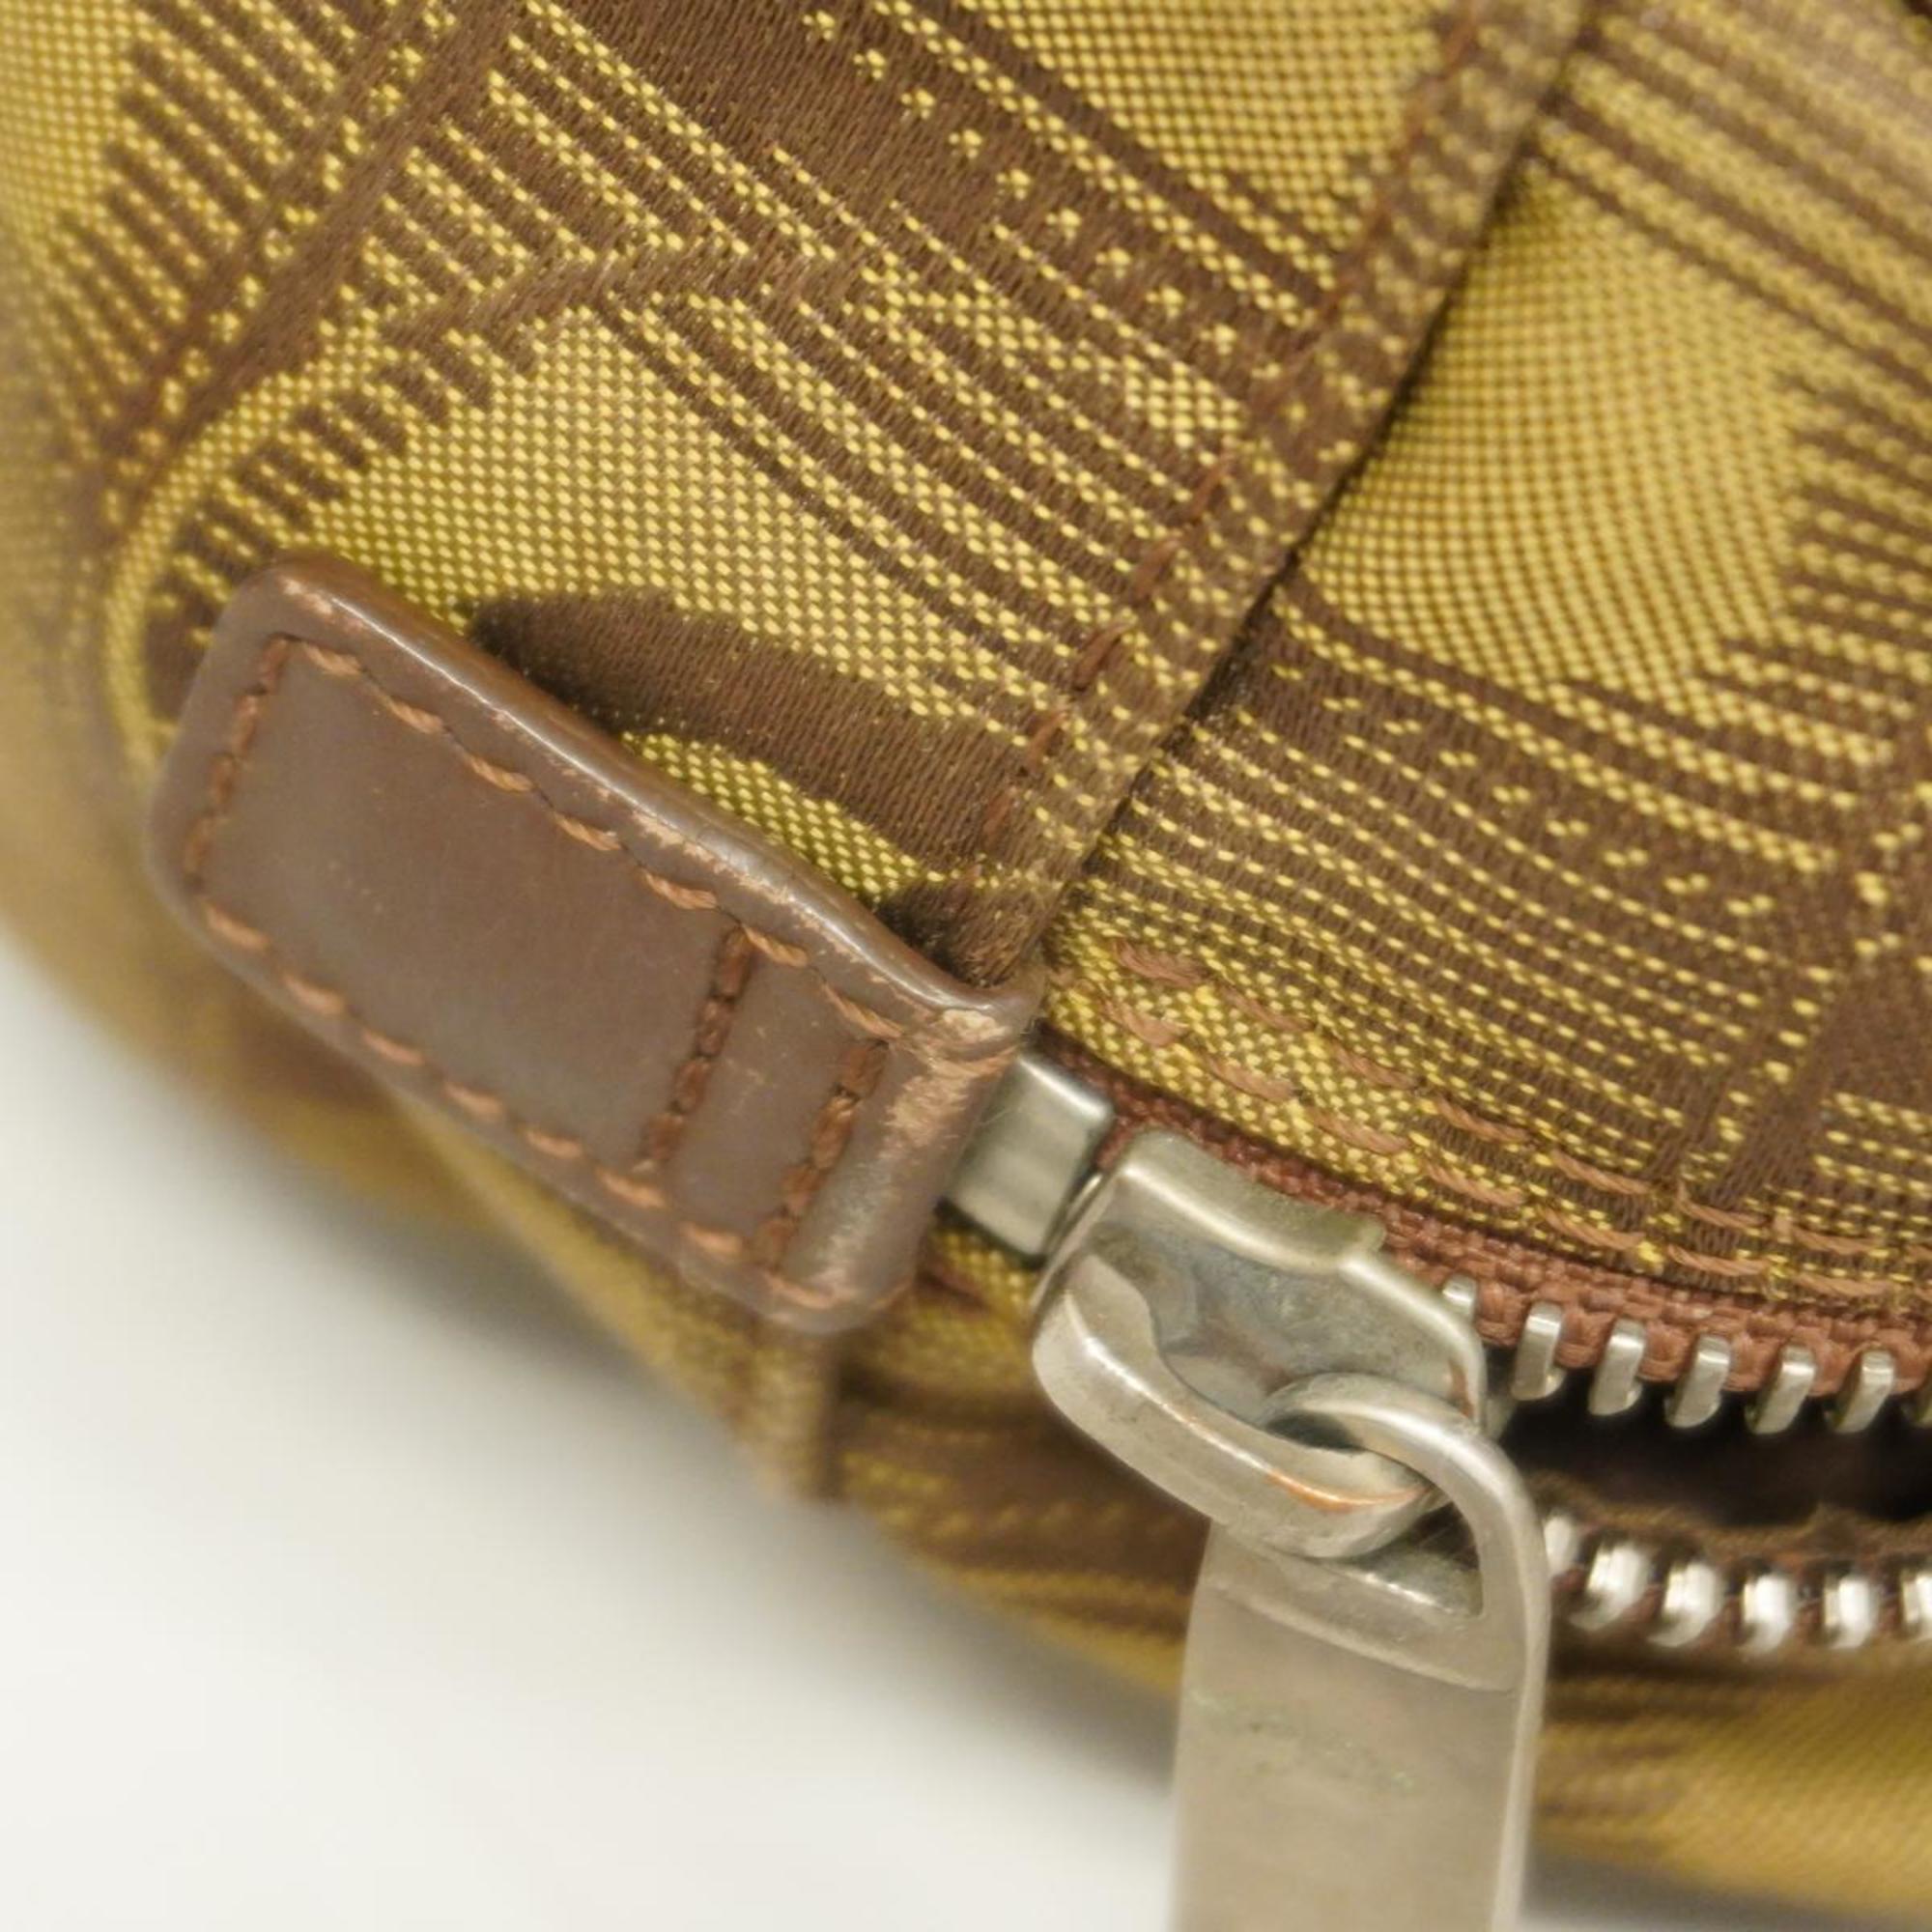 Chanel handbag new travel nylon khaki ladies